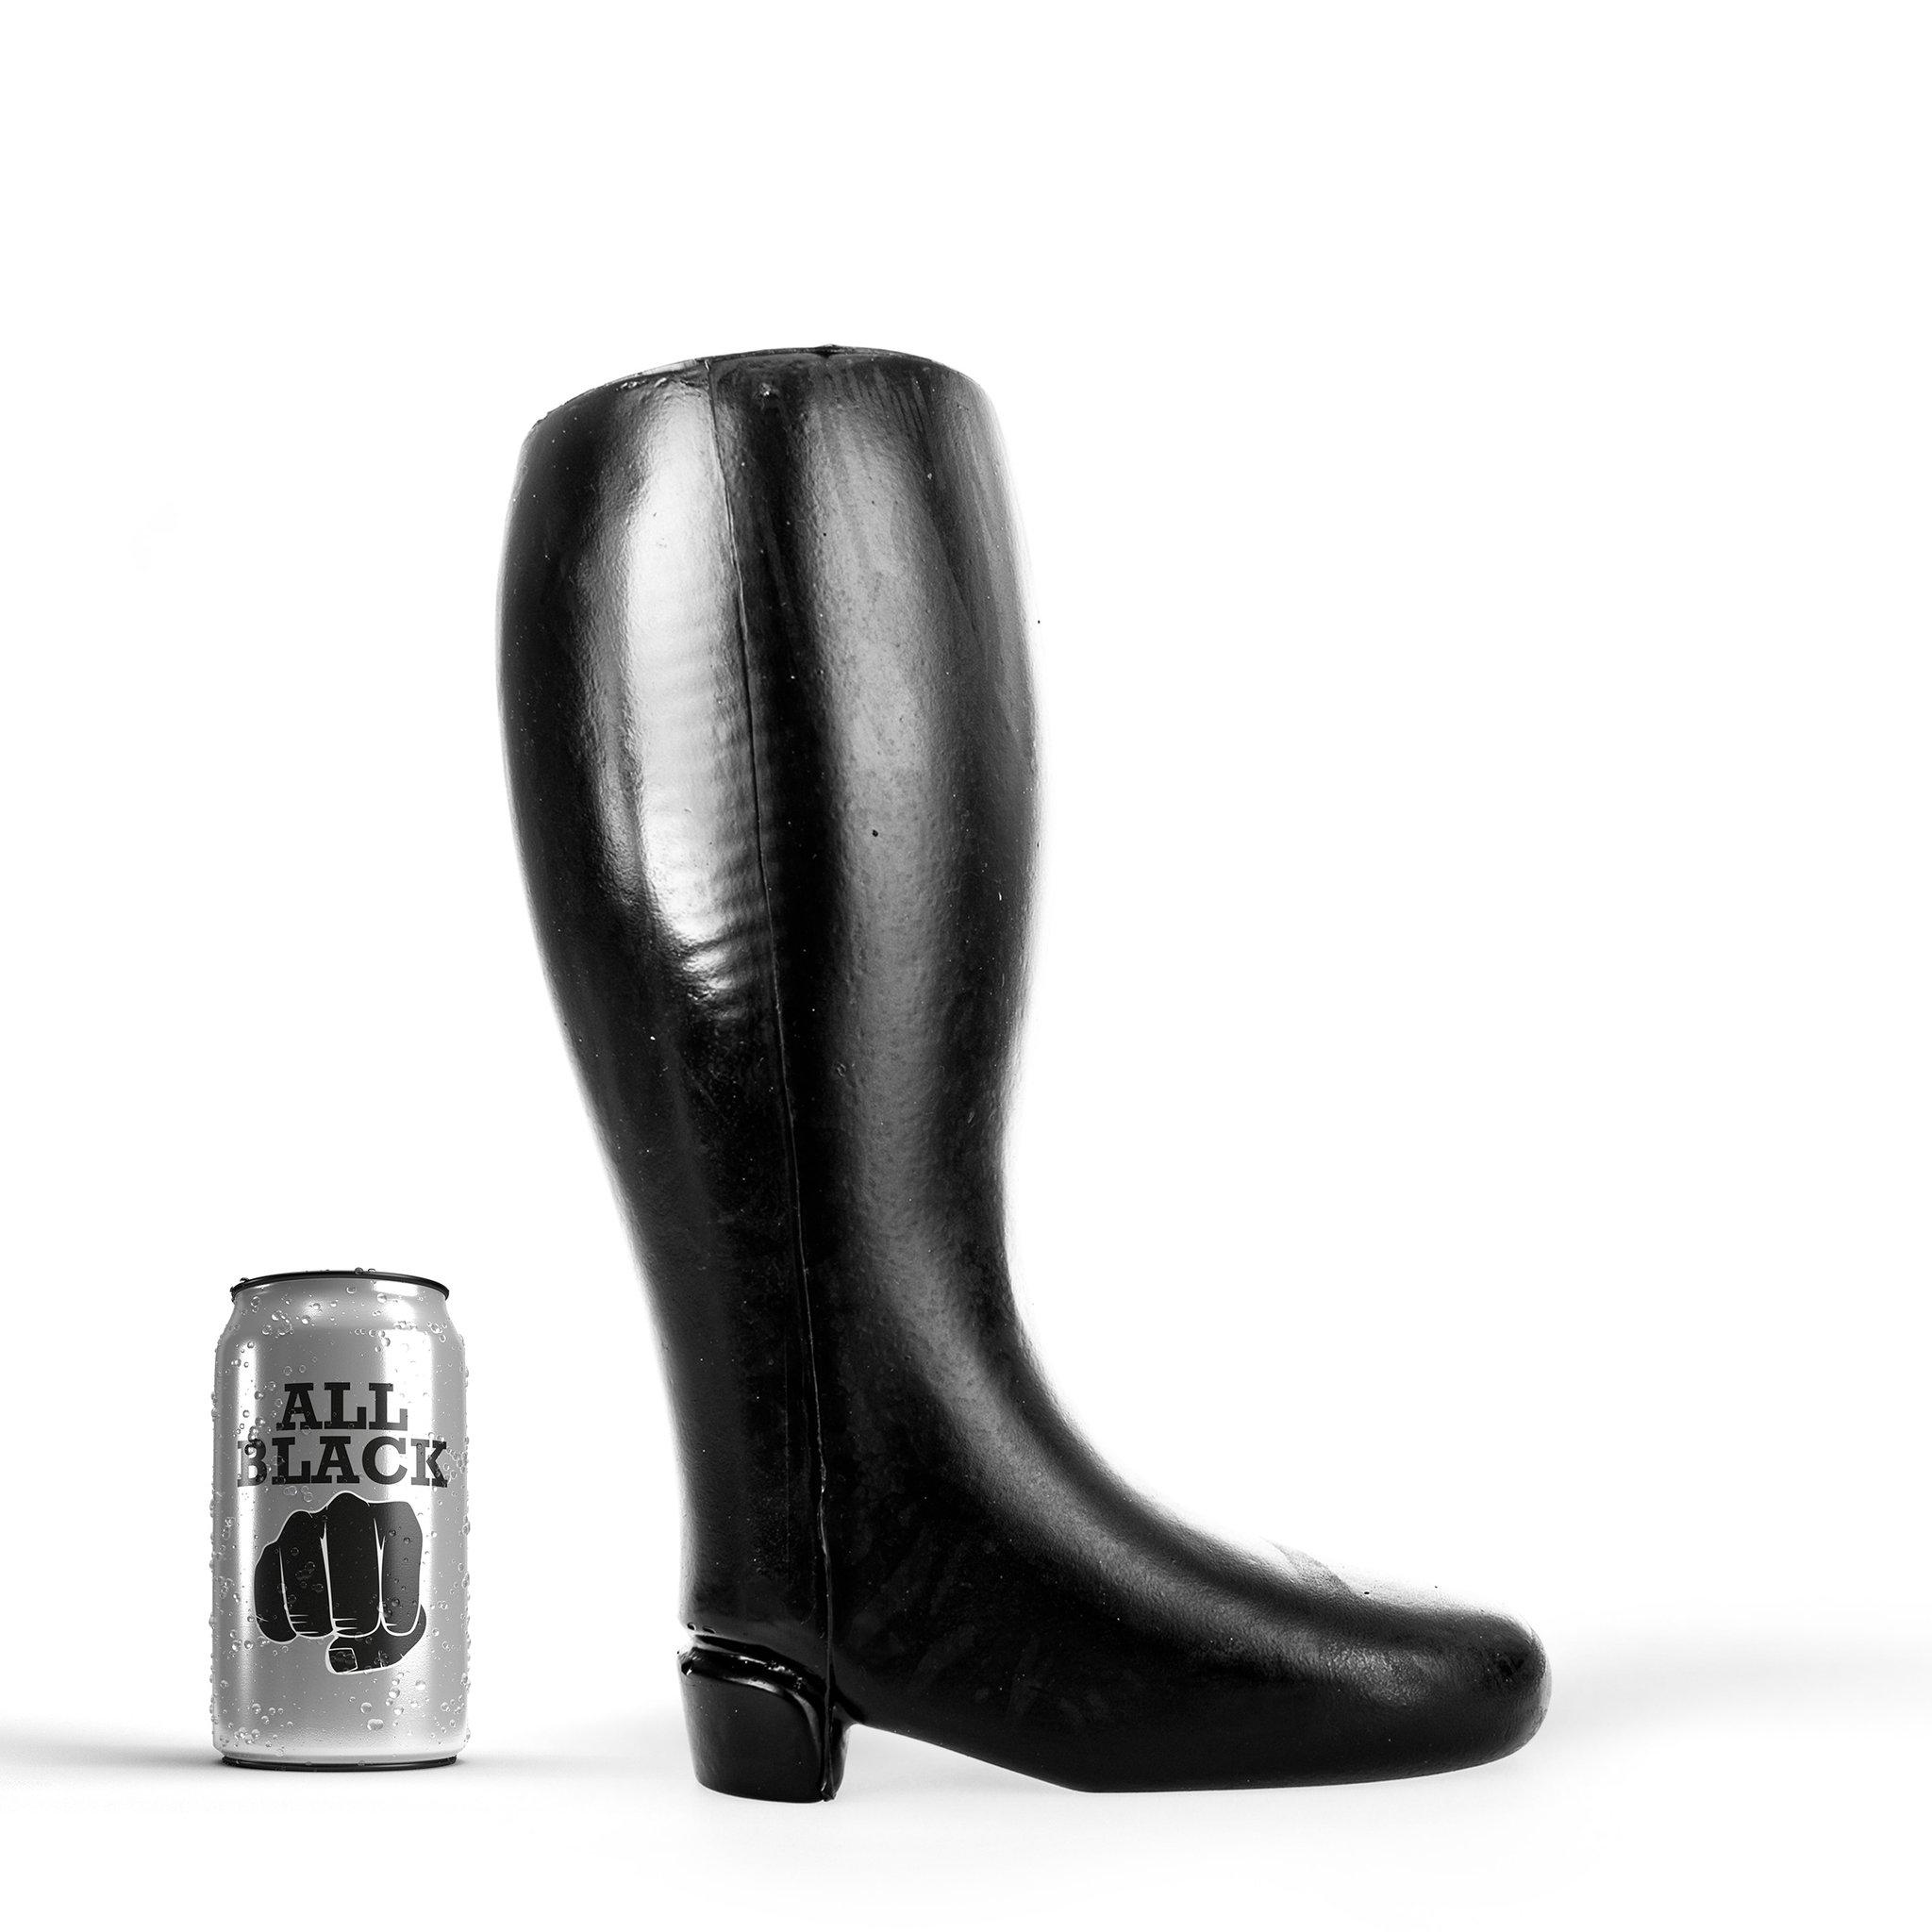 All Black Dildo Boots, 32 cm